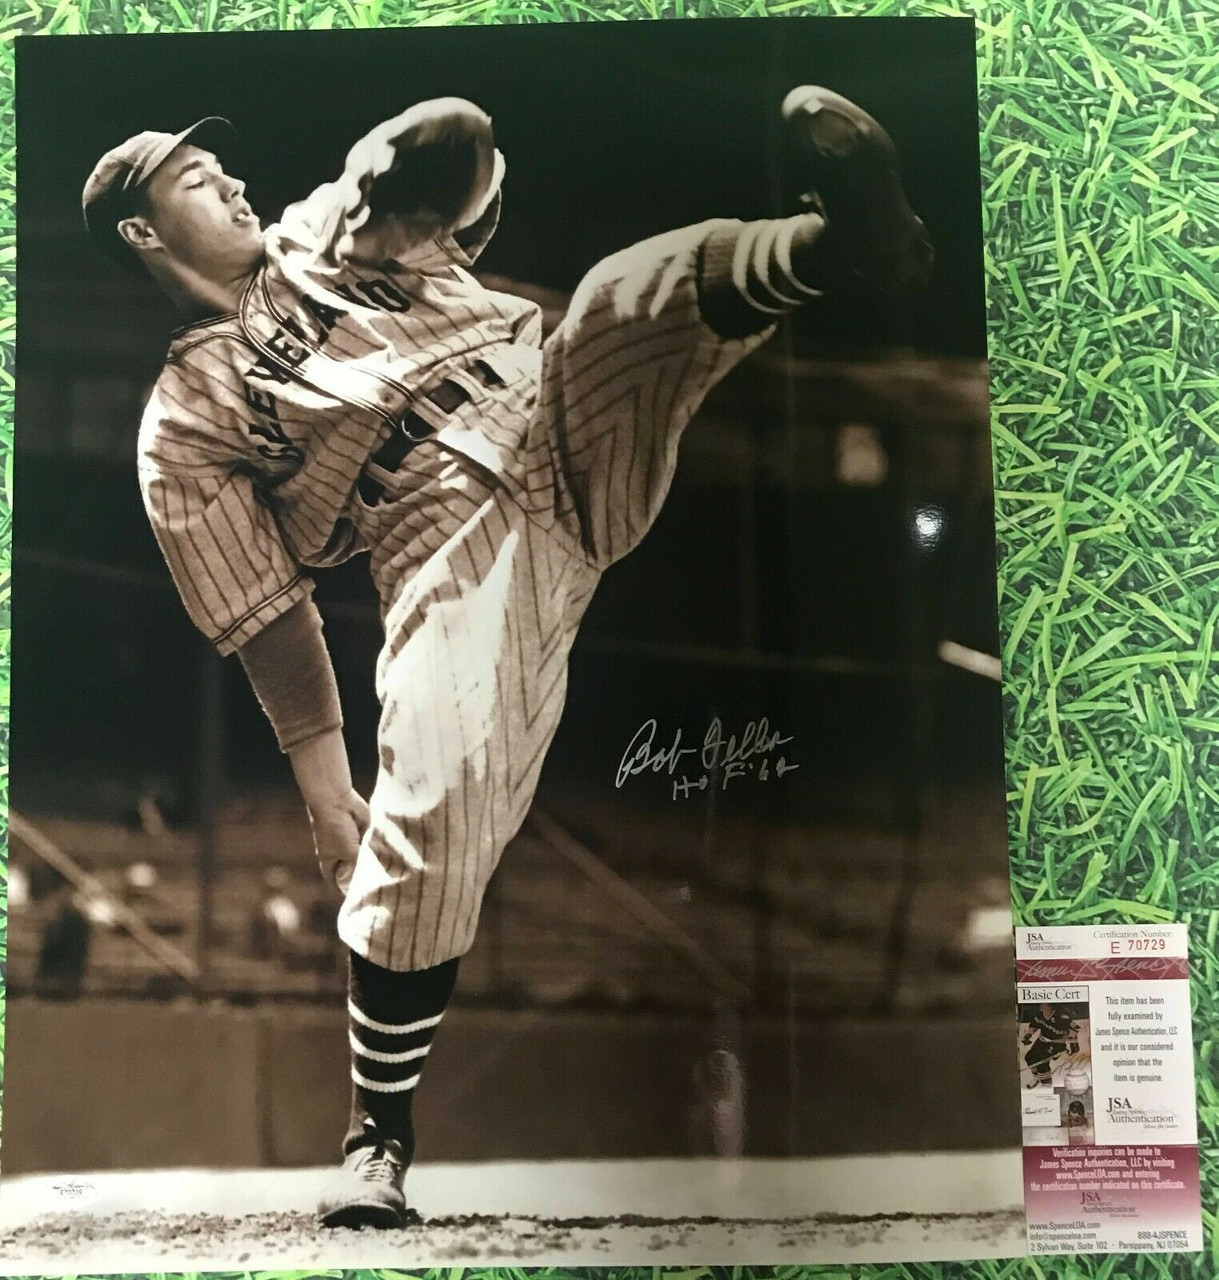 Bob Feller Cleveland Indians Autographed Signed Replica Baseball